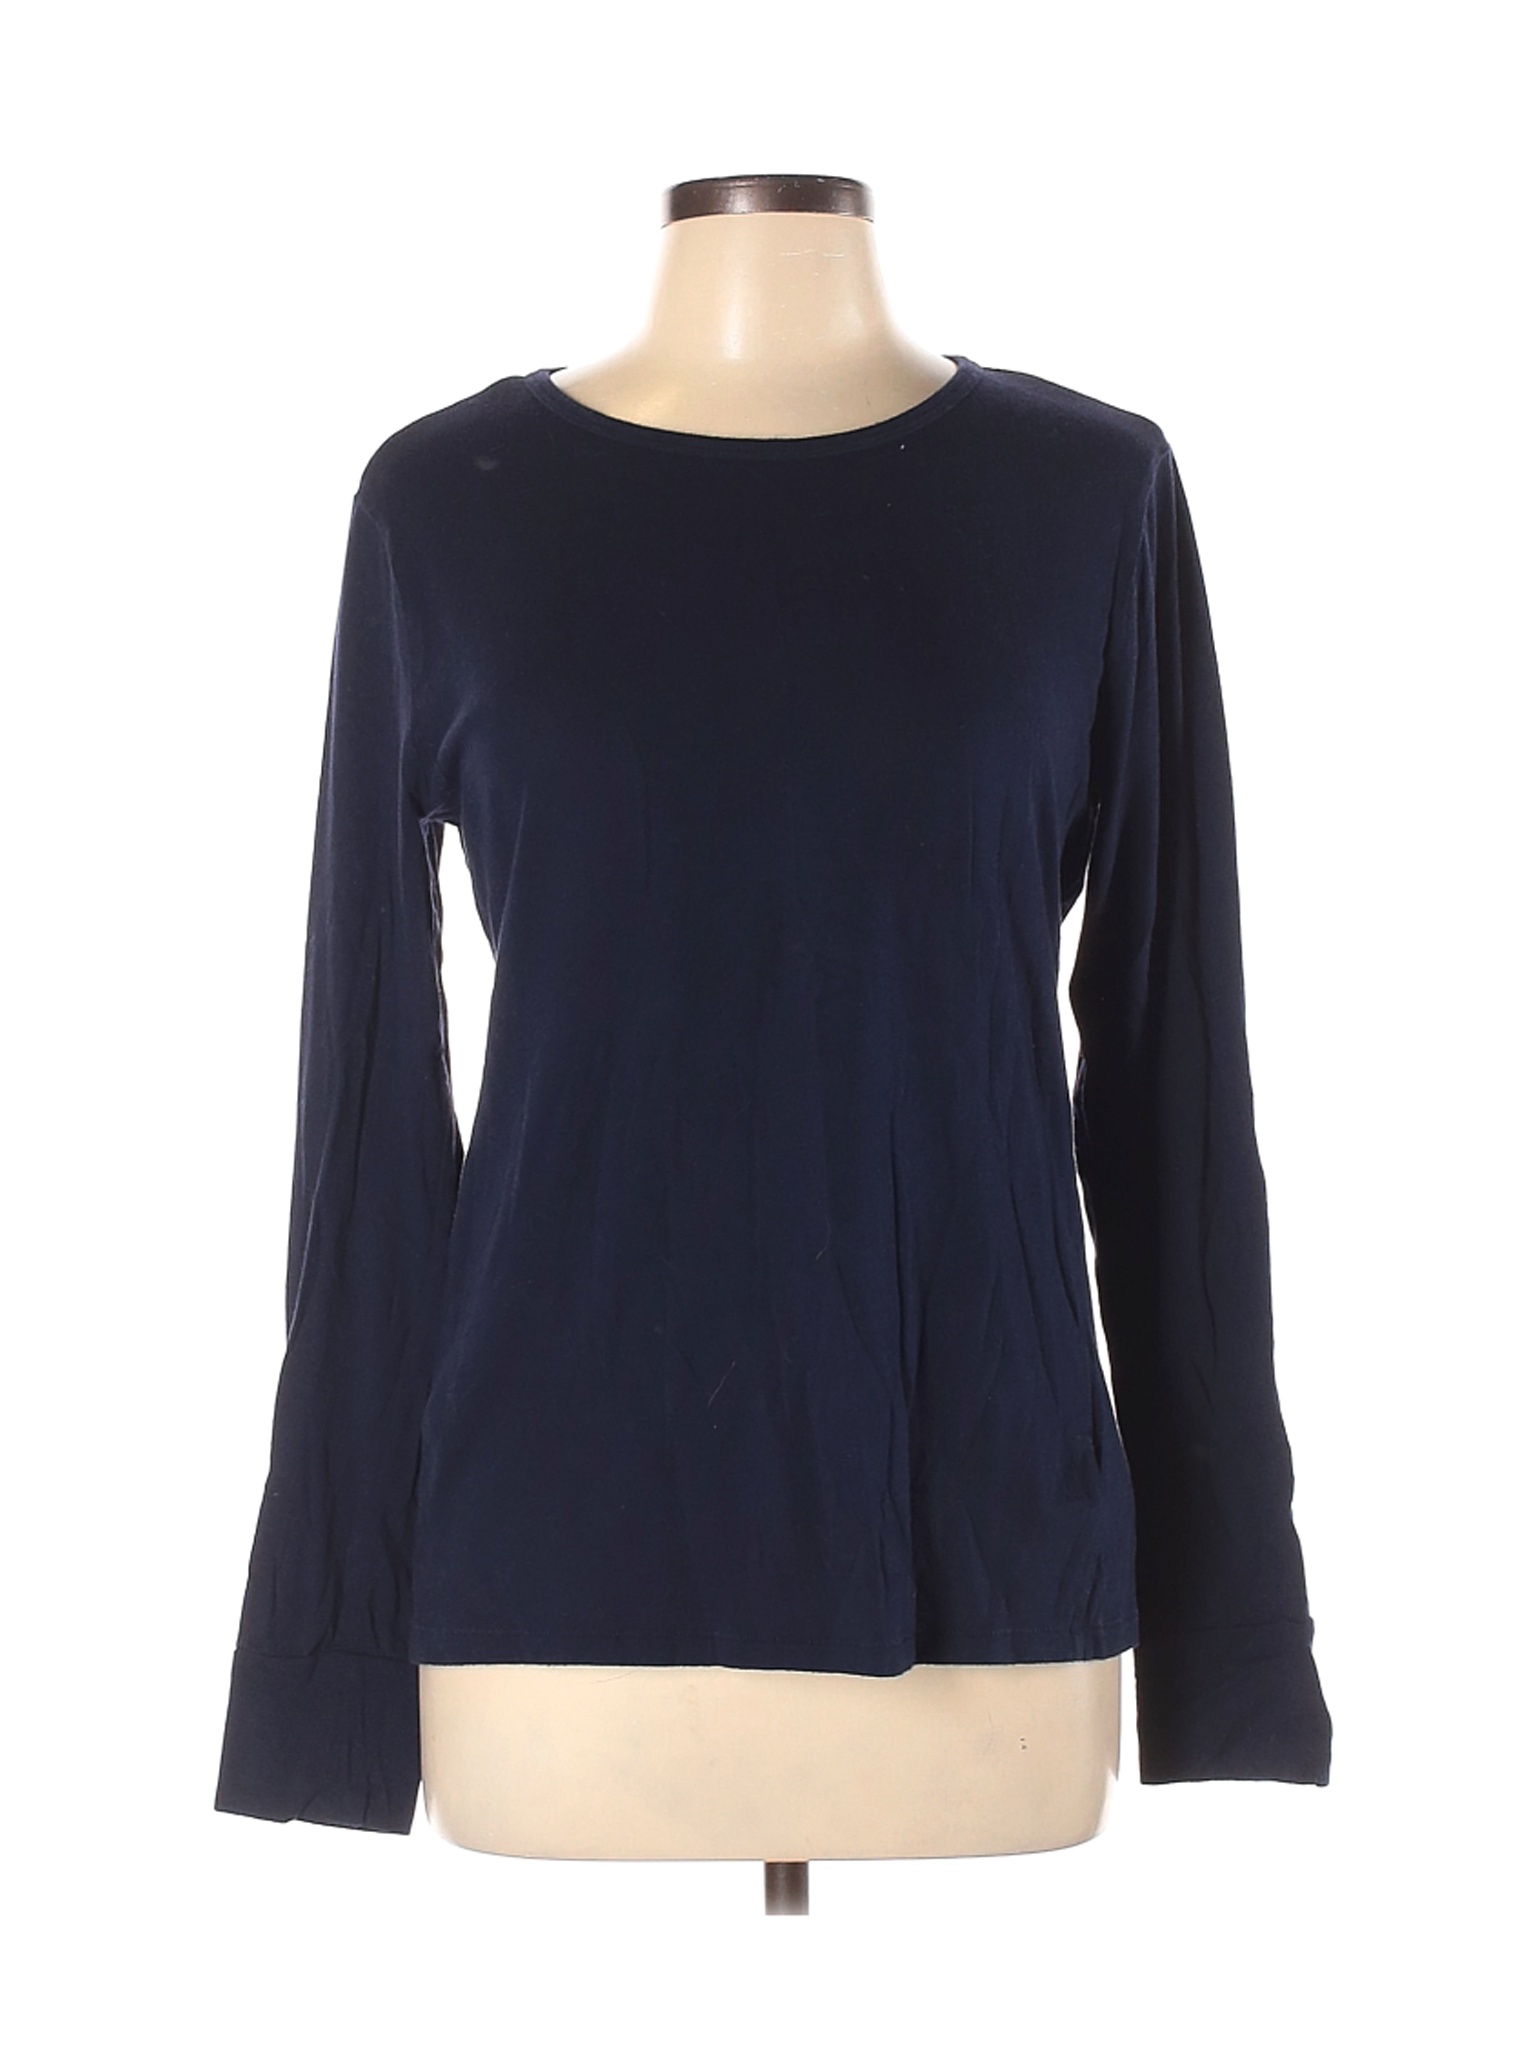 Gap Women Blue Long Sleeve T-Shirt L | eBay